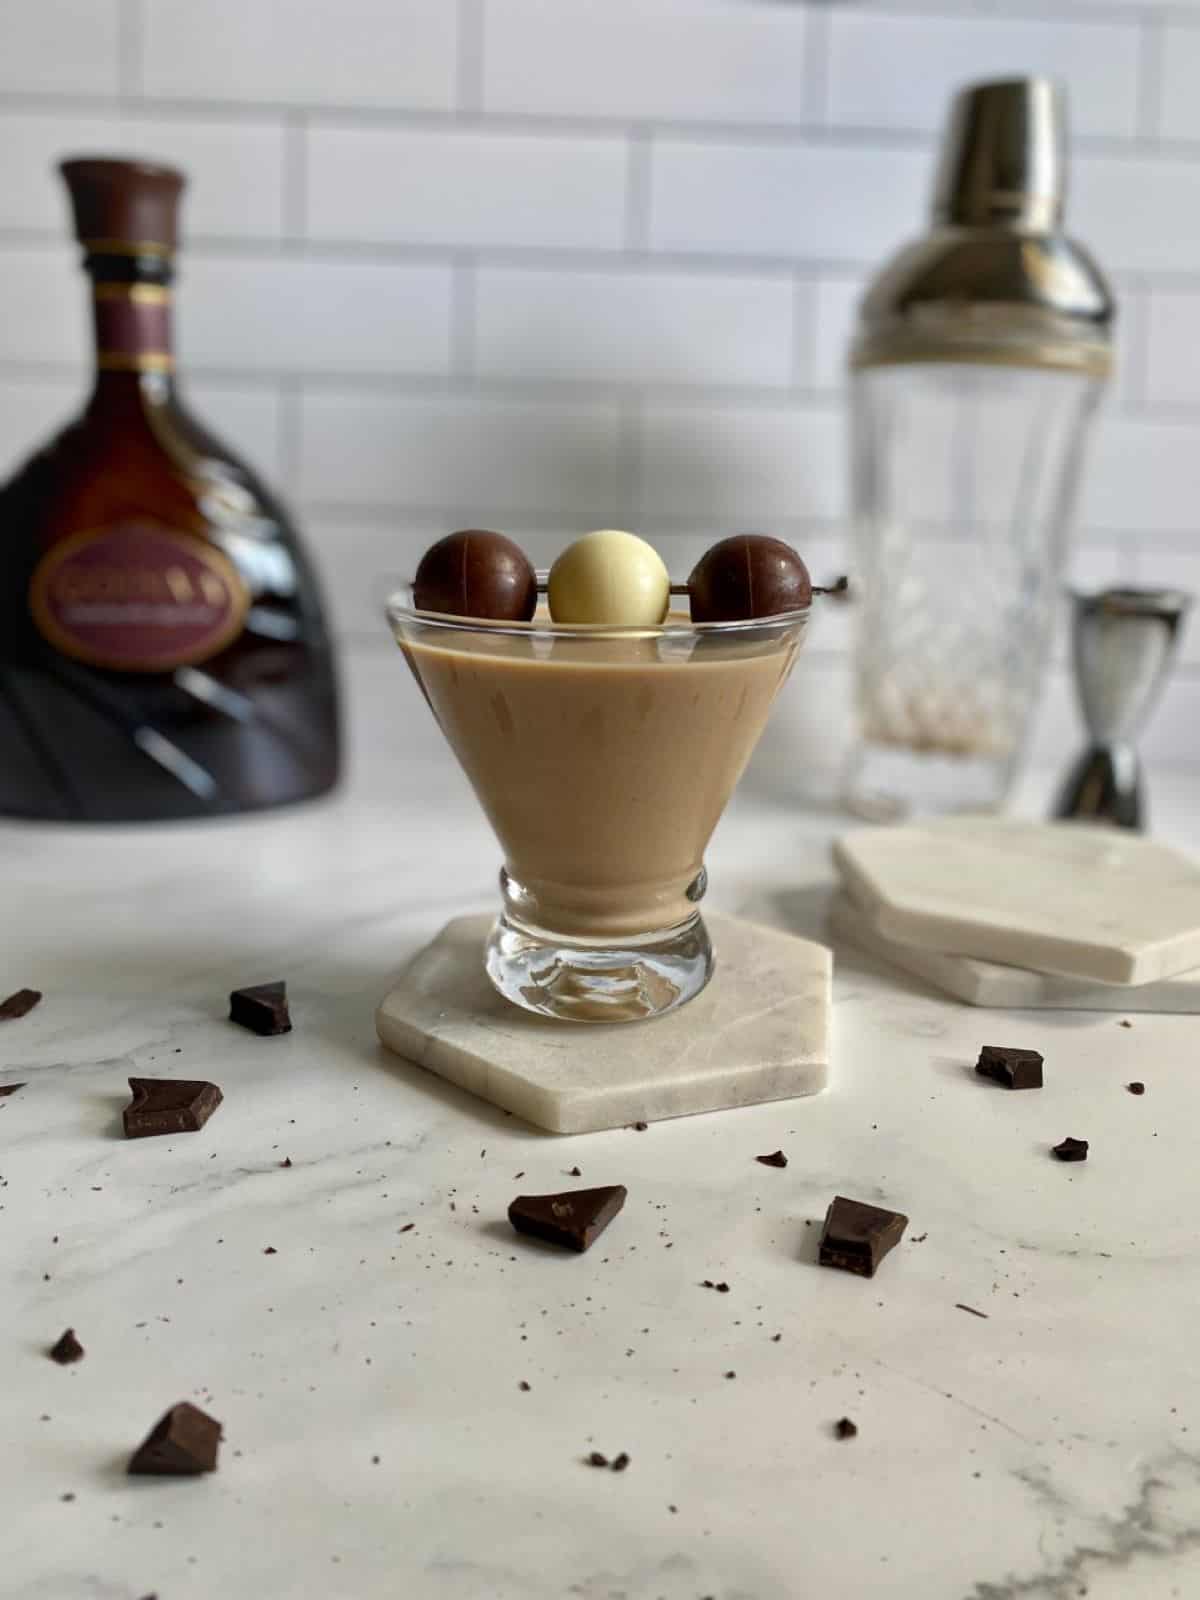 Chocolate Martini cocktail with chocolate candy garnish.